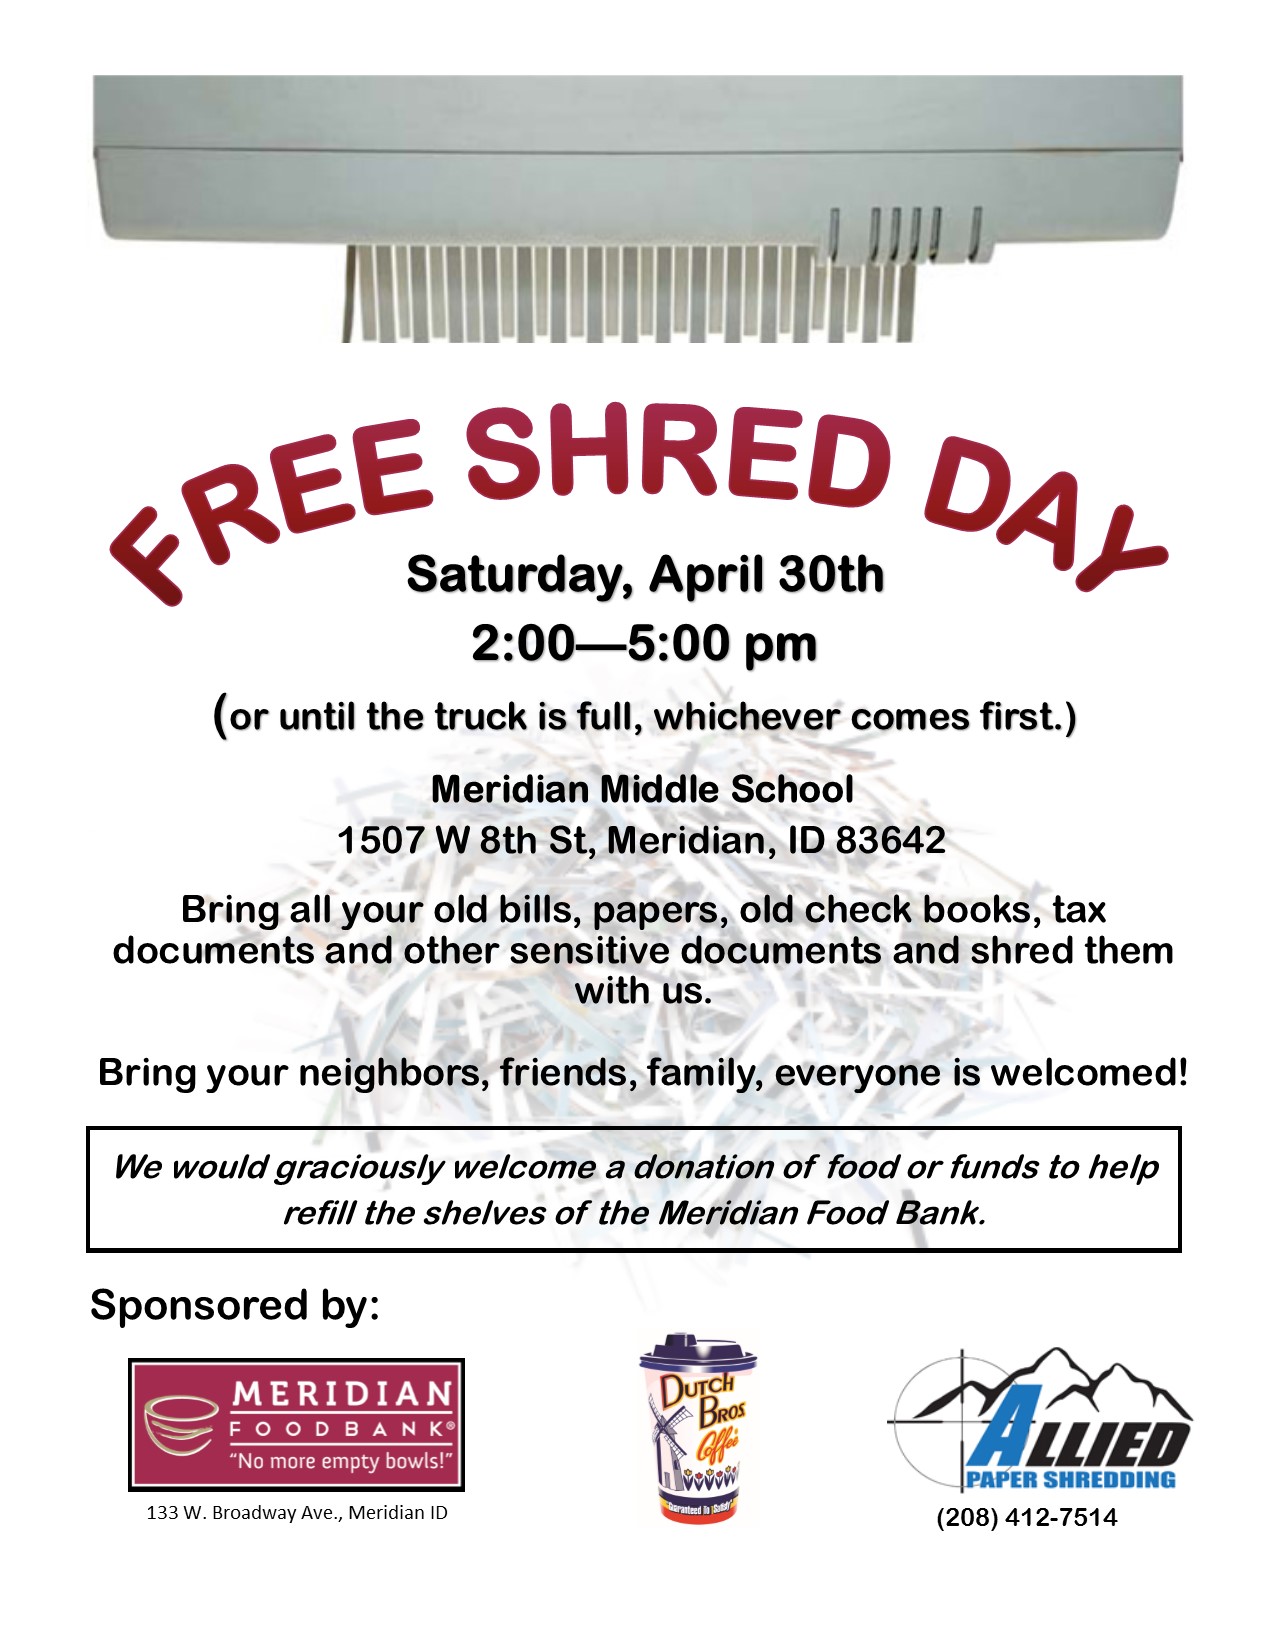 Free Shred Day Meridian Foodbank